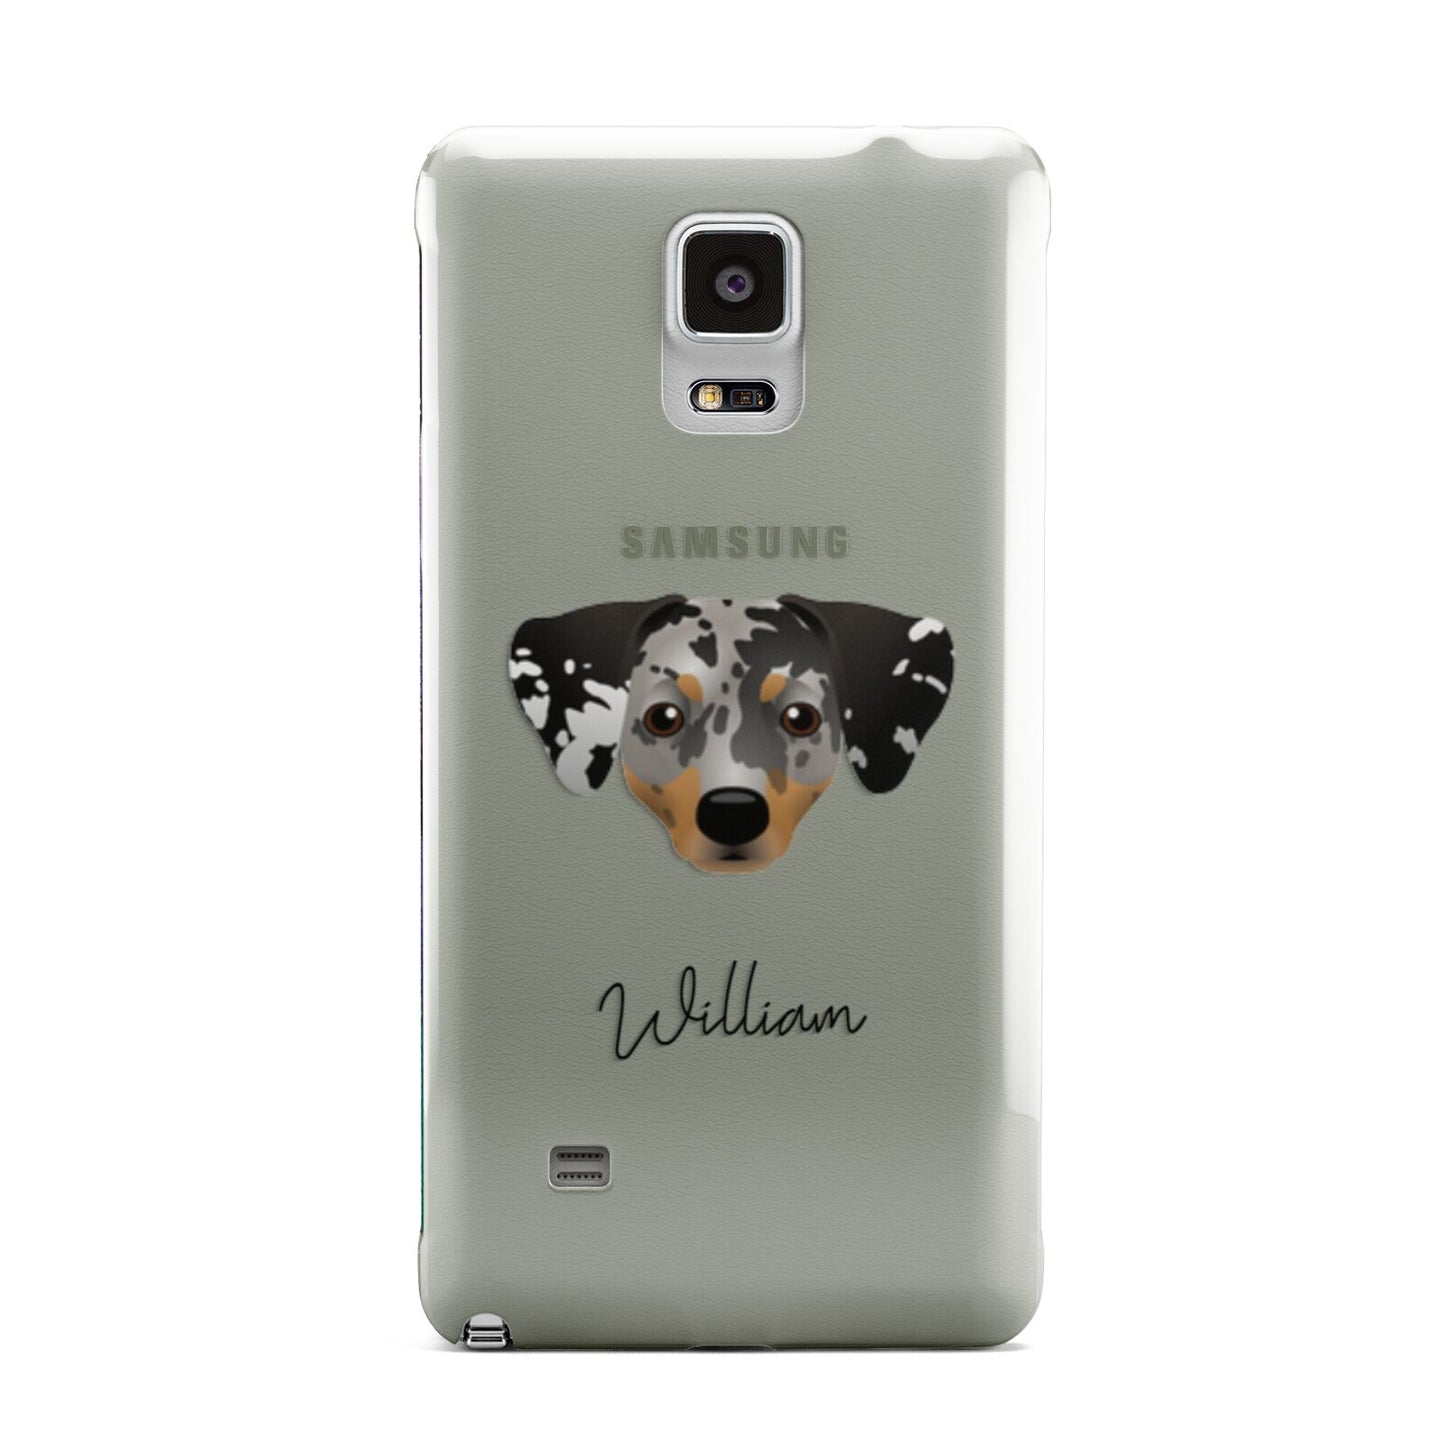 Chiweenie Personalised Samsung Galaxy Note 4 Case